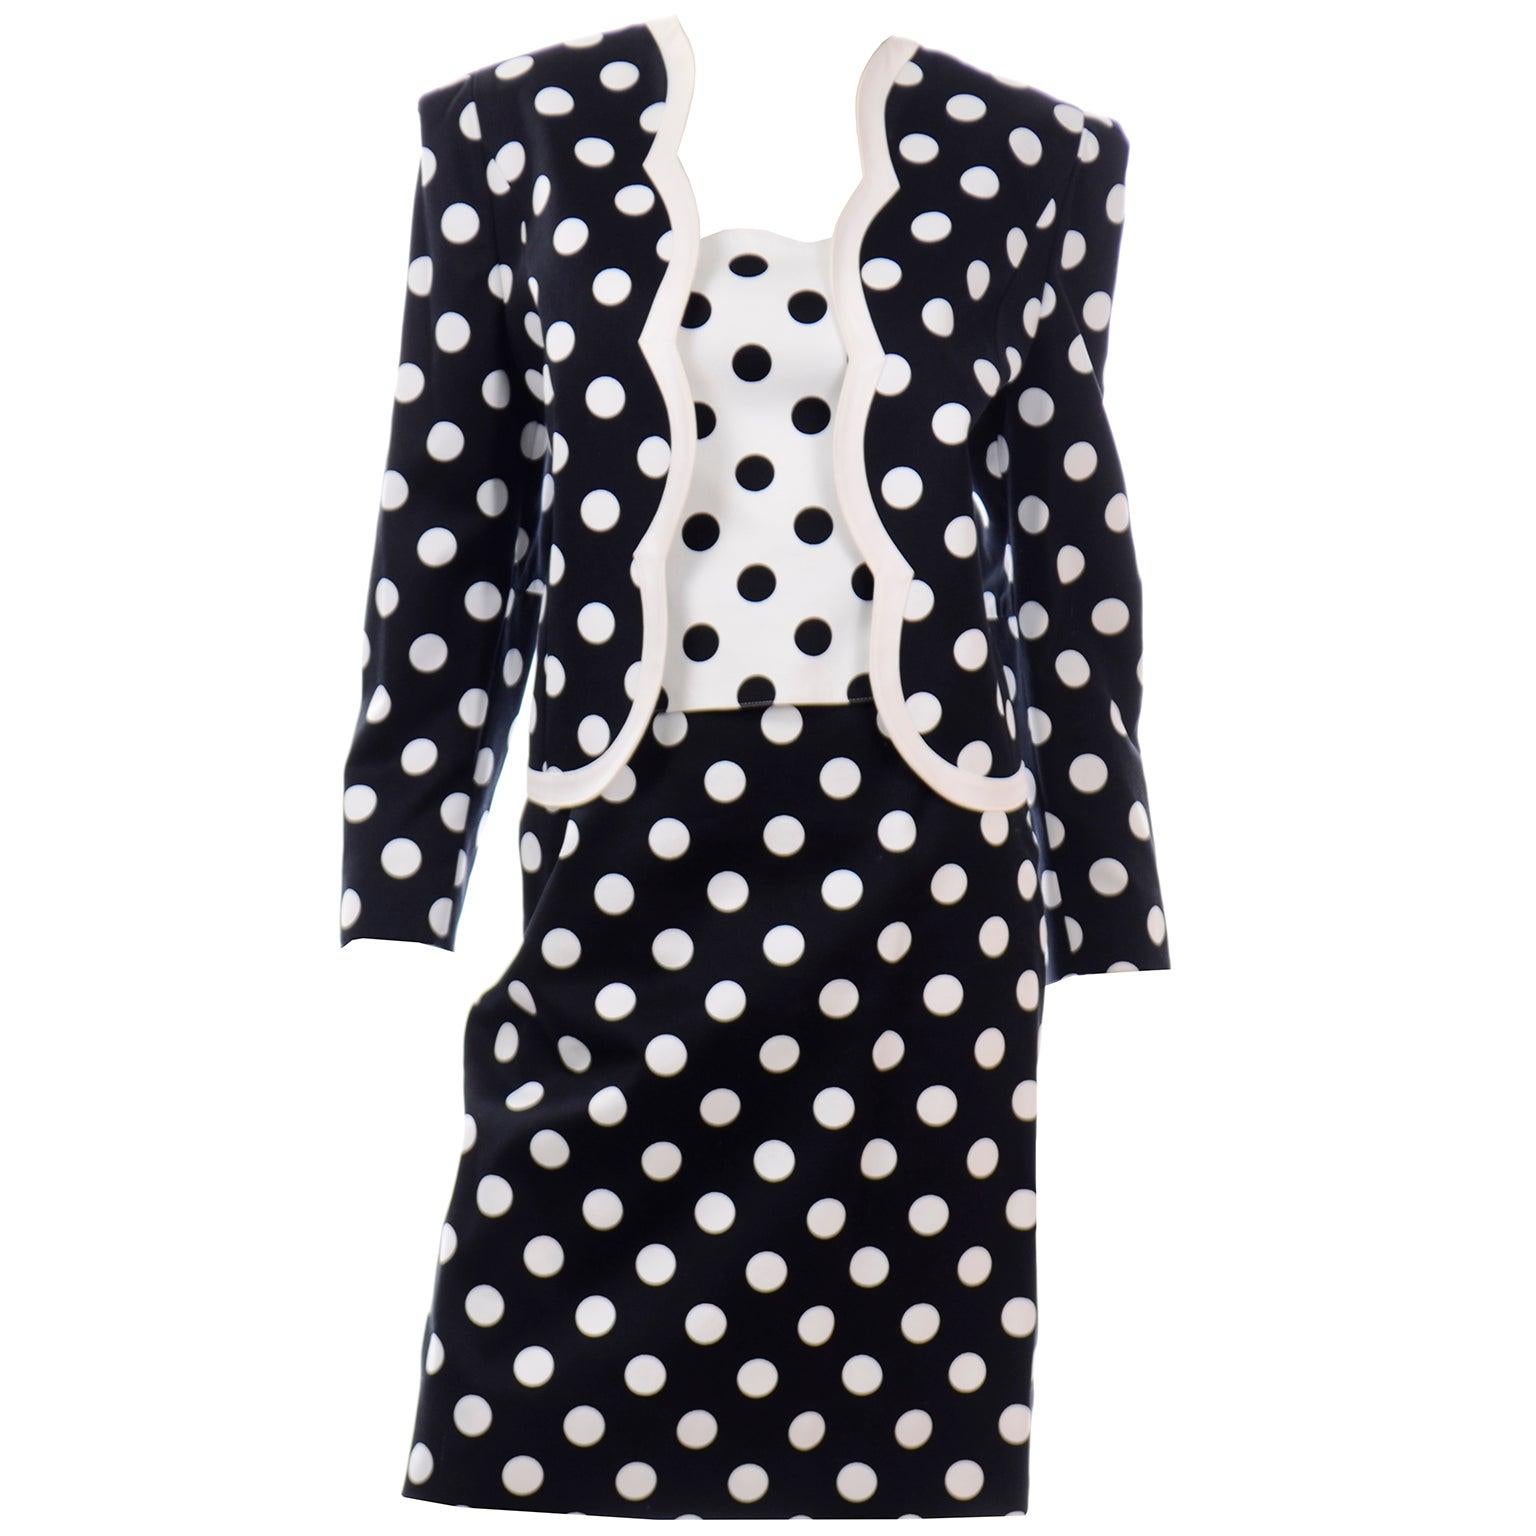 Louis Feraud Vintage Black & White Polka Dot 3Pc Outfit w Bustier Skirt & Jacket